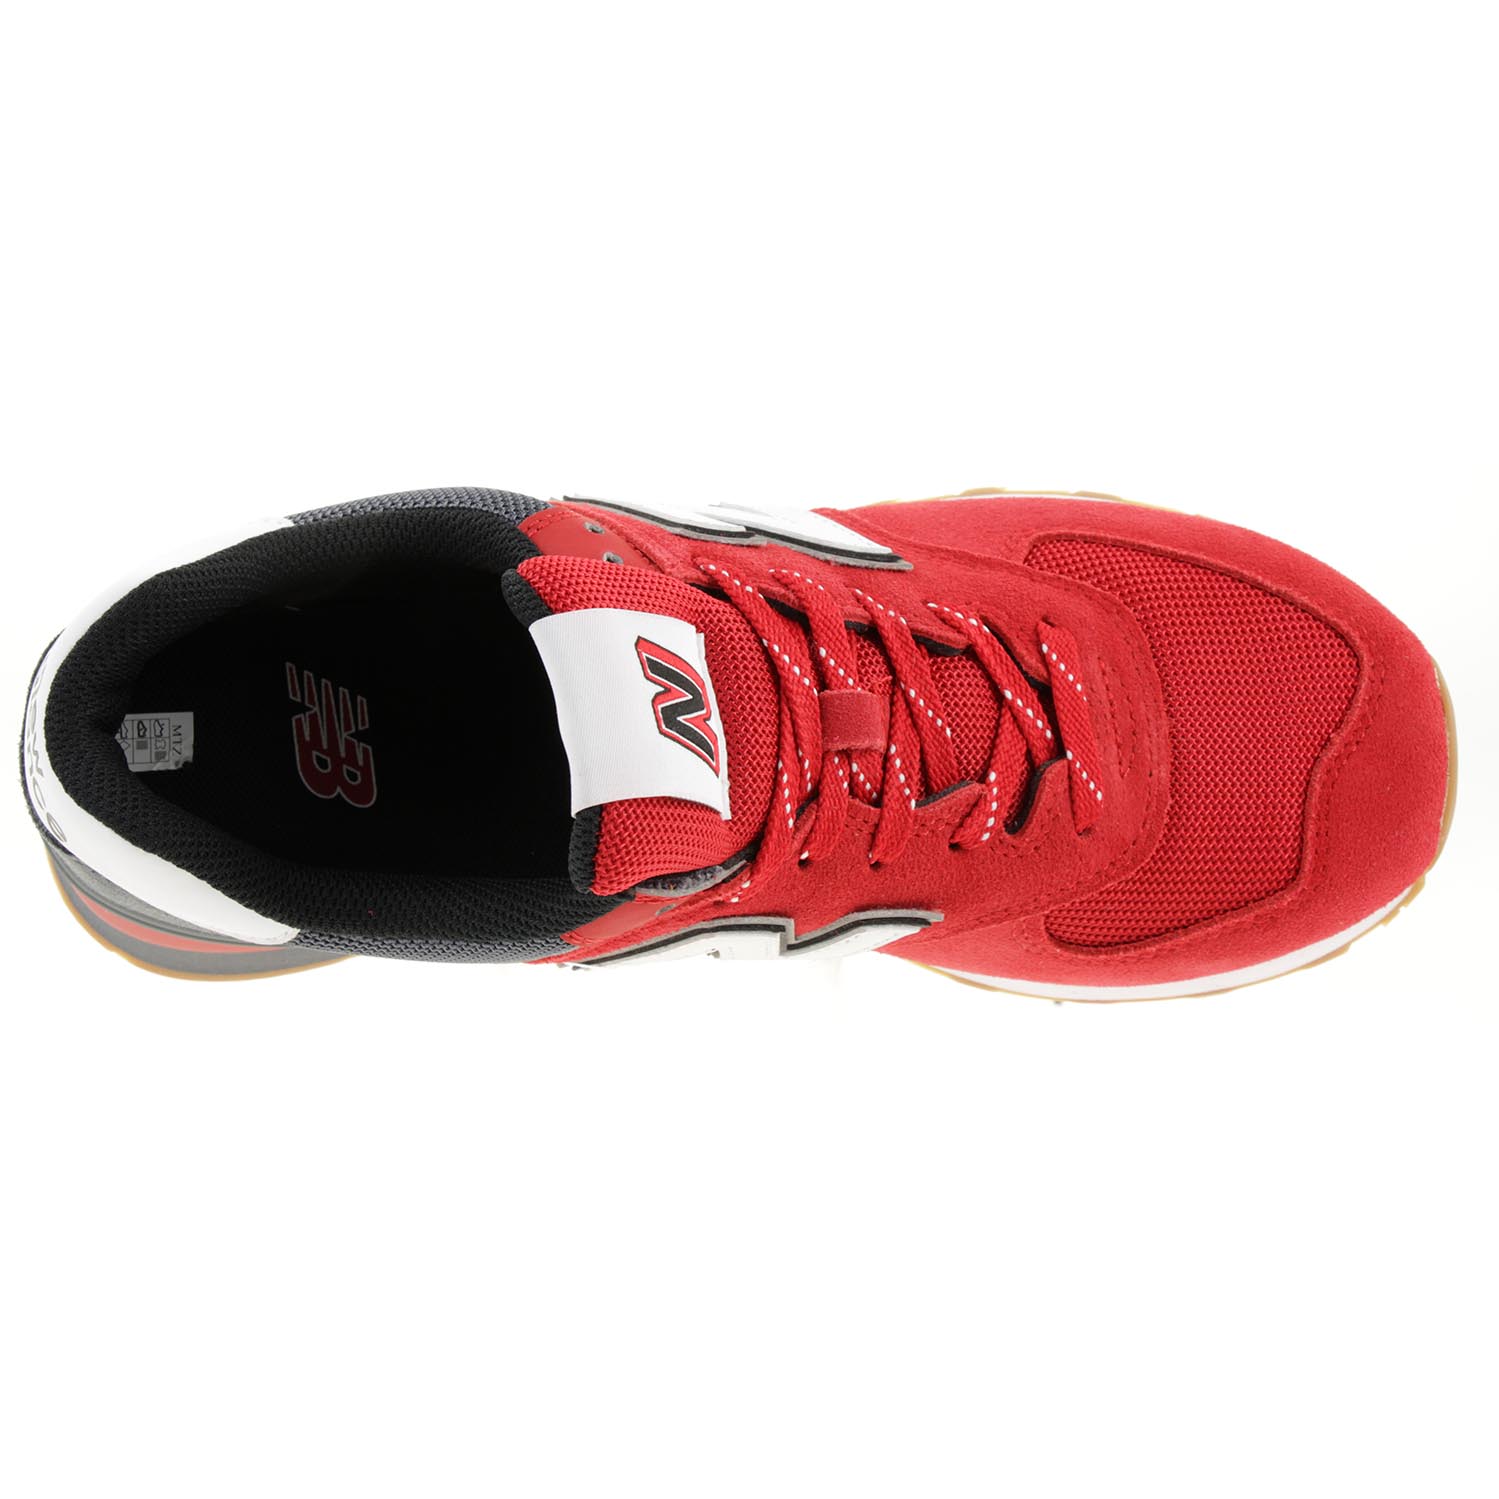 New Balance ML 574 SKD Classic Sneaker Herren Schuhe rot